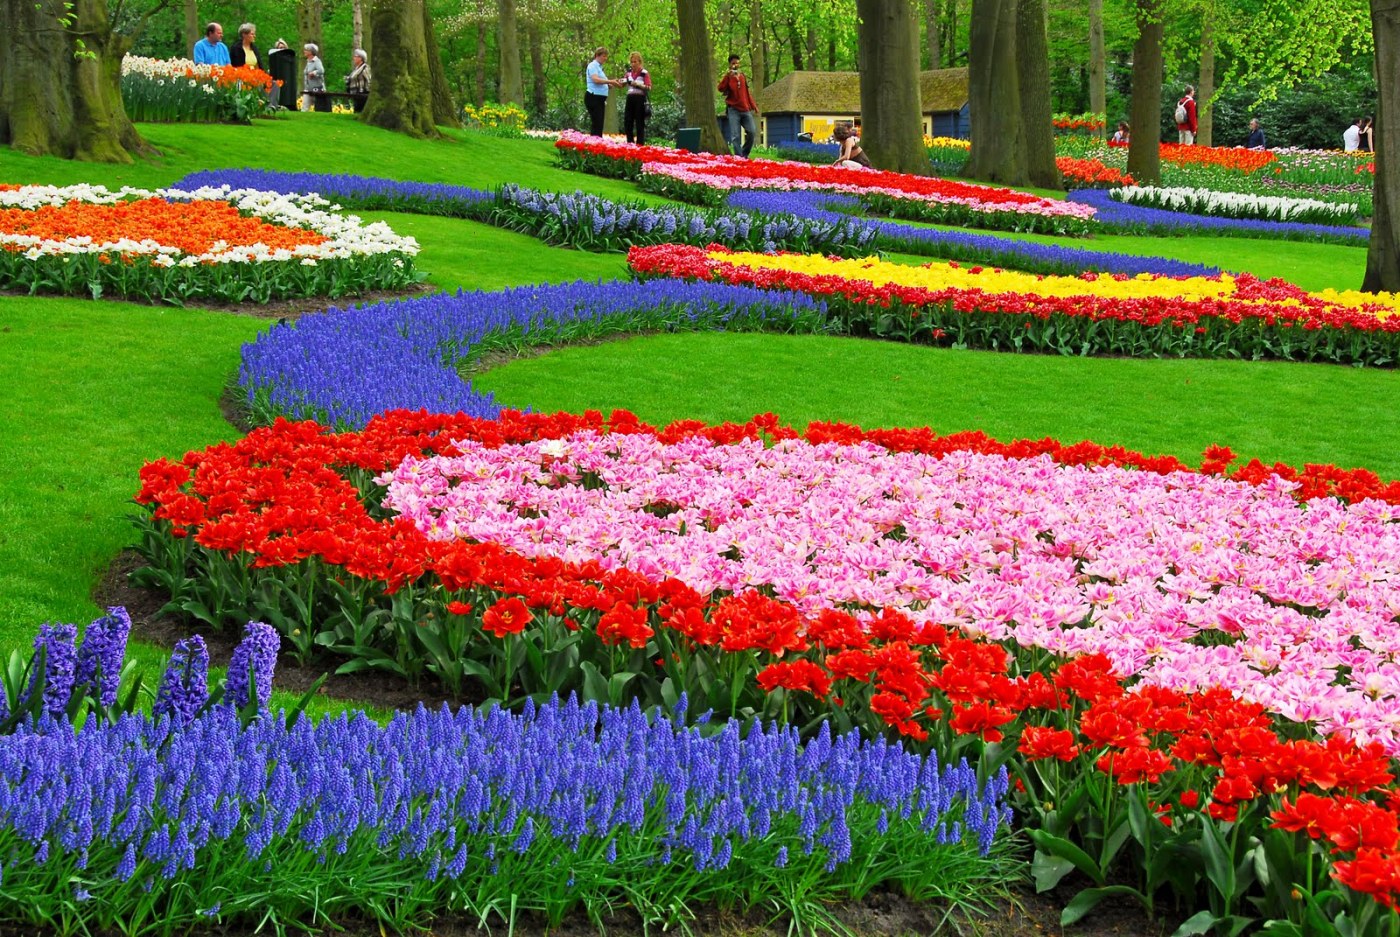 buat fondo de pantalla,jardín,jardín botánico,flor,planta,tulipán